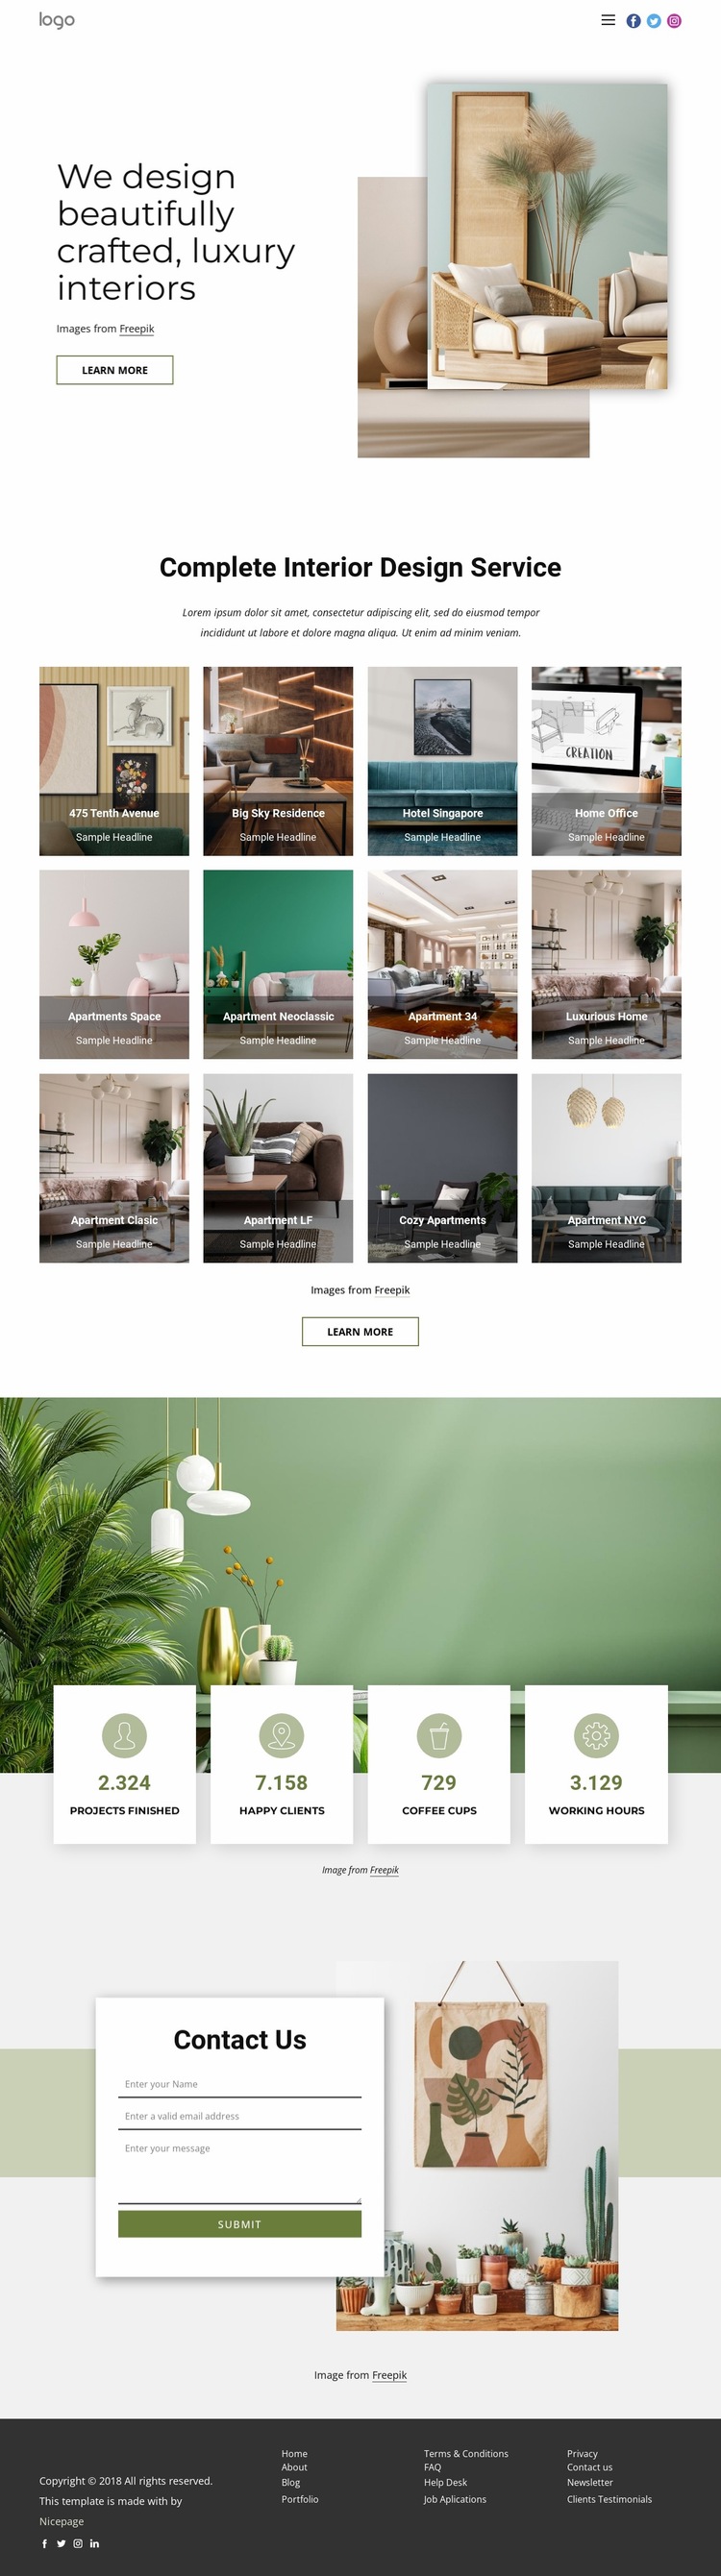 We design luxury interiors Website Builder Templates